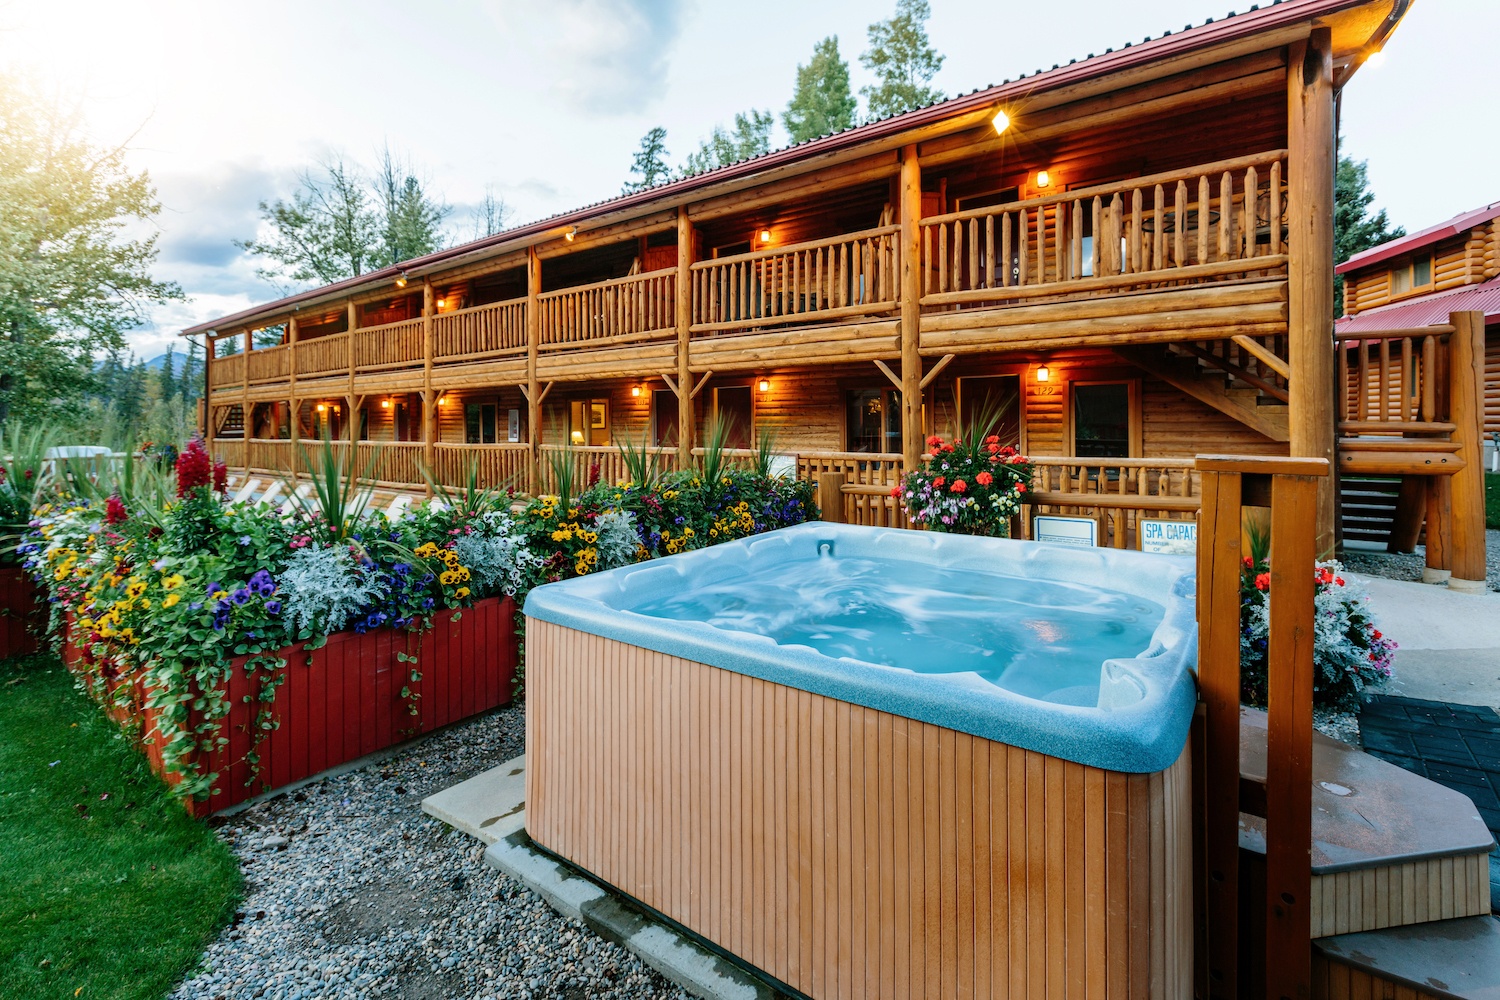 Best Jasper Hotels and Cabins